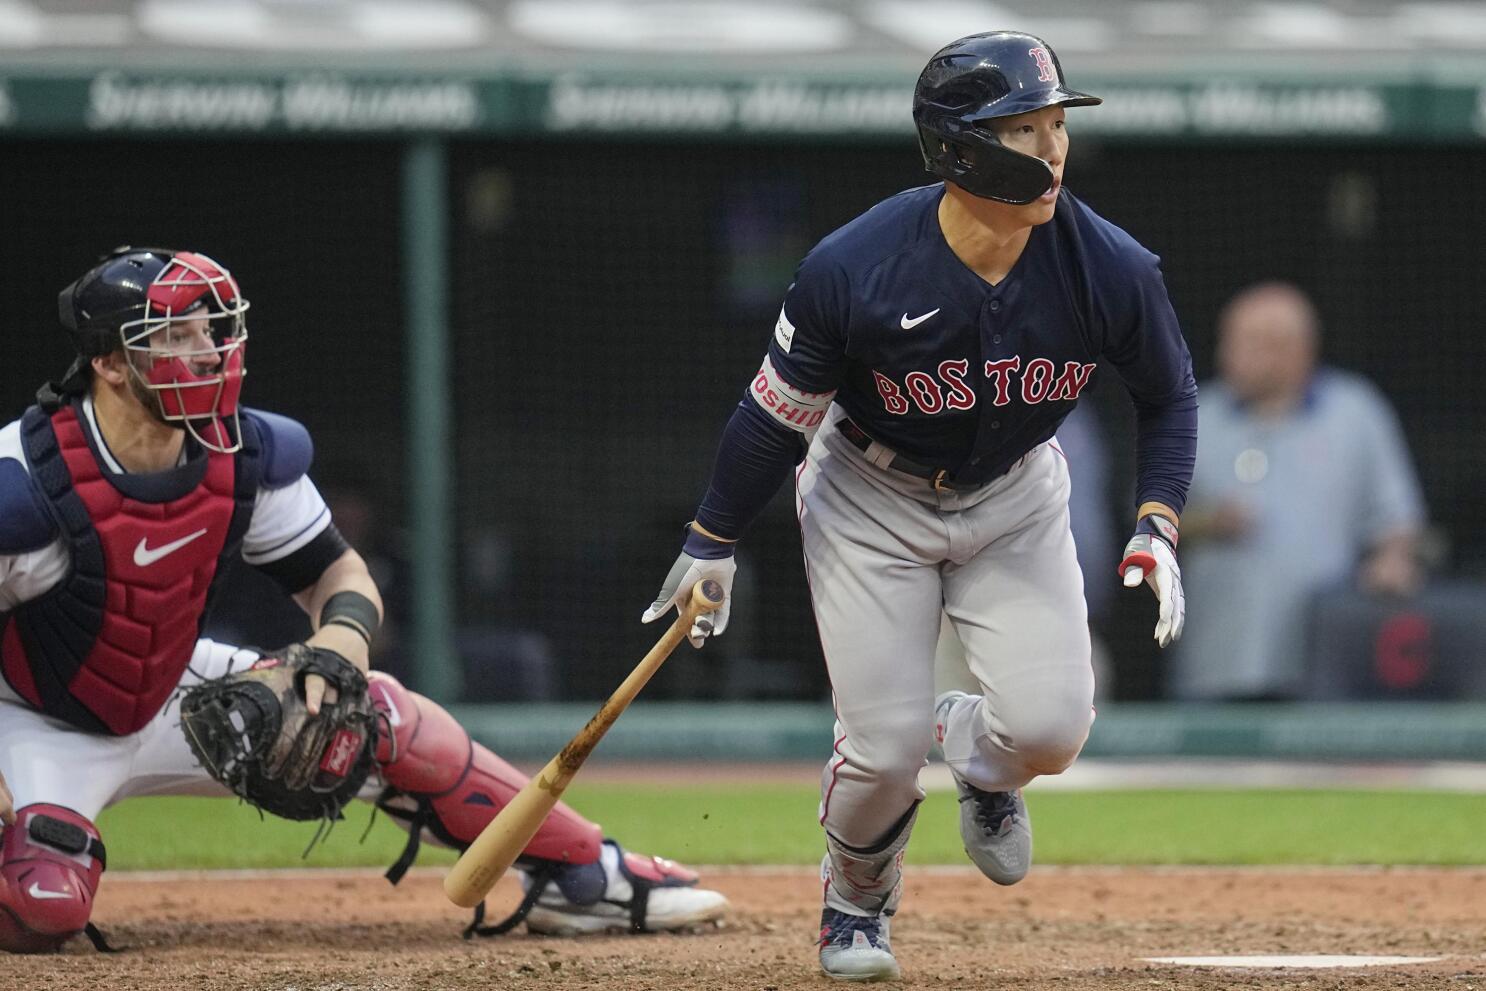 Boston Red Sox win series vs Guardians, James Paxton strong rehab